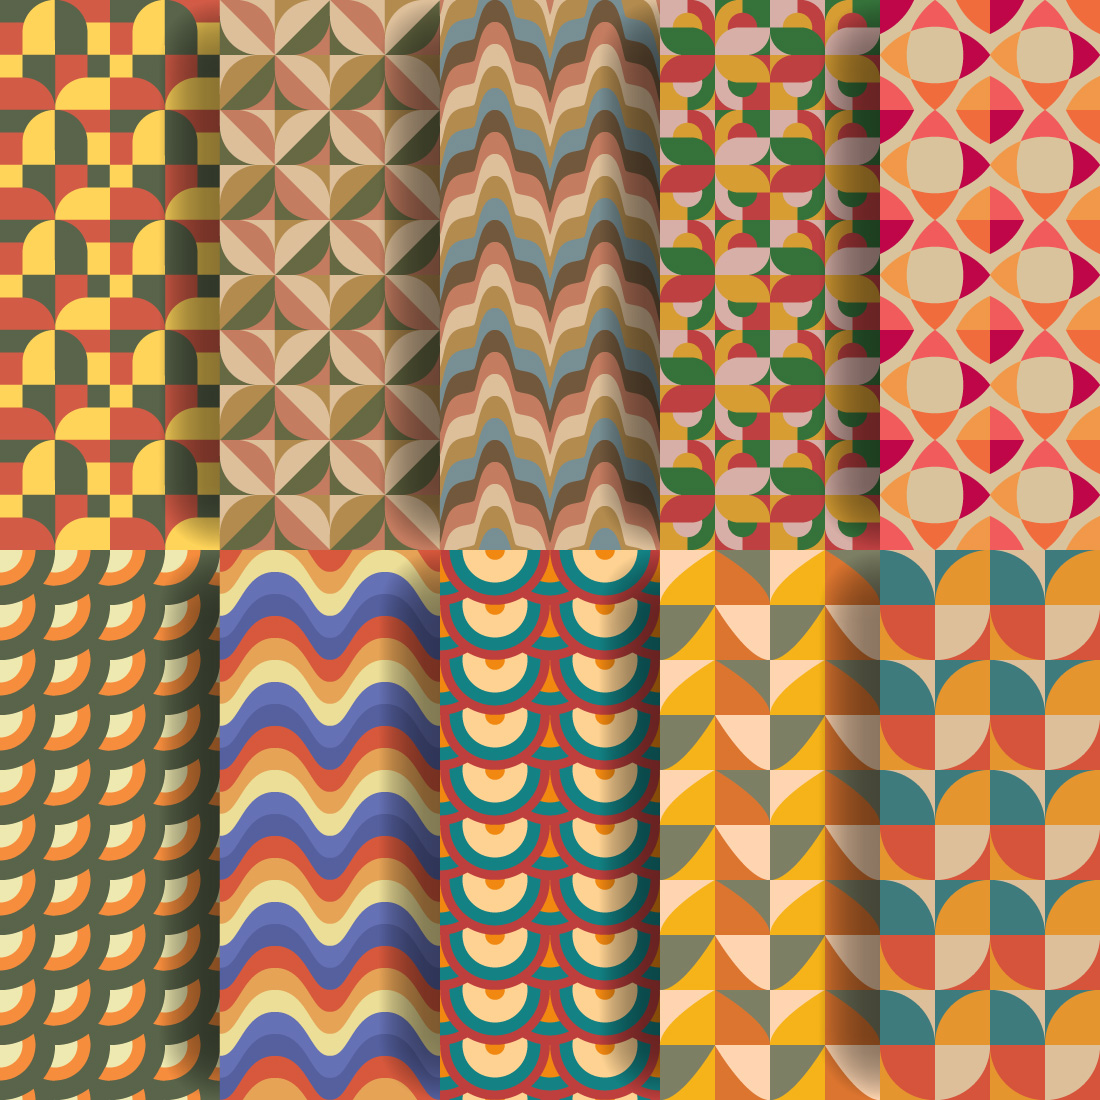 Vintage Geometric Patterns cover image.